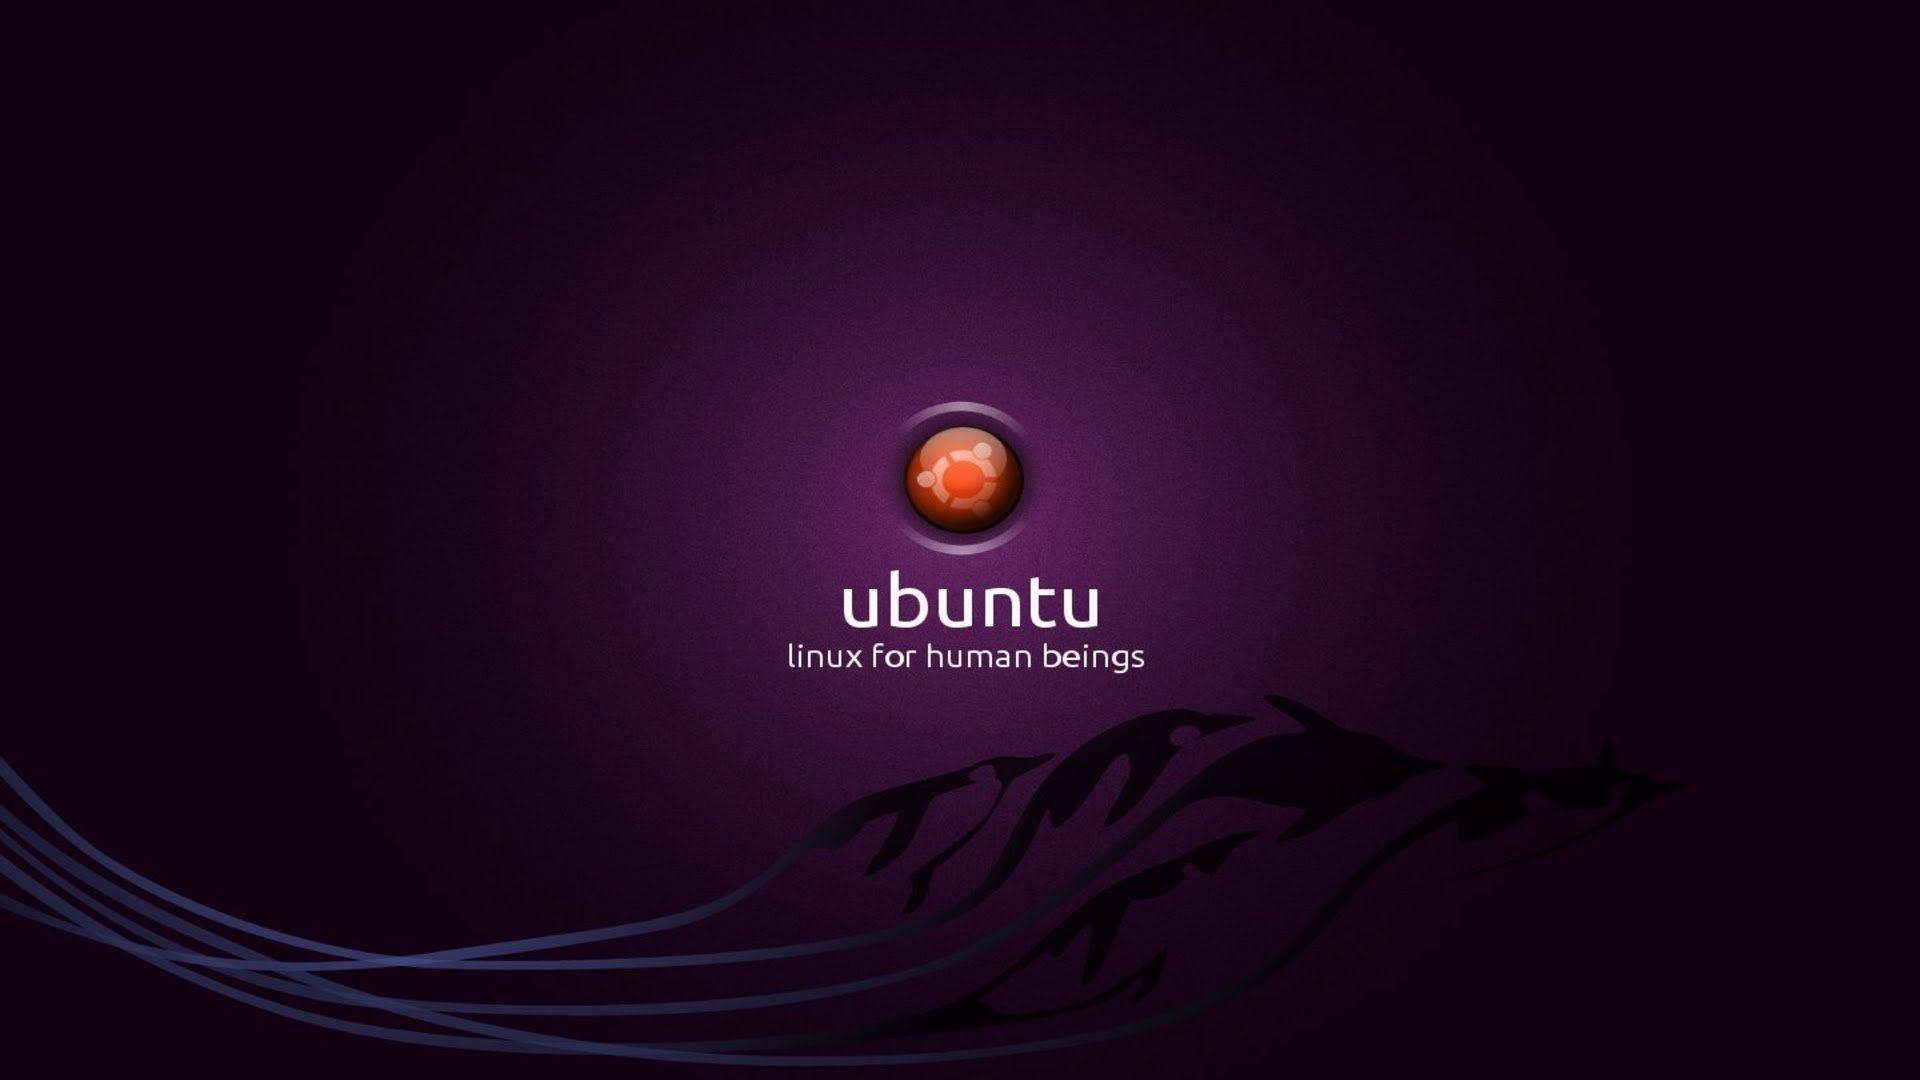 Free download Ubuntu User How To Change Wallpaper And Desktop Behavior In Ubuntu [1920x1080] for your Desktop, Mobile & Tablet. Explore Ubuntu 14.04 Wallpaper. Official Ubuntu Wallpaper, Ubuntu Wallpaper